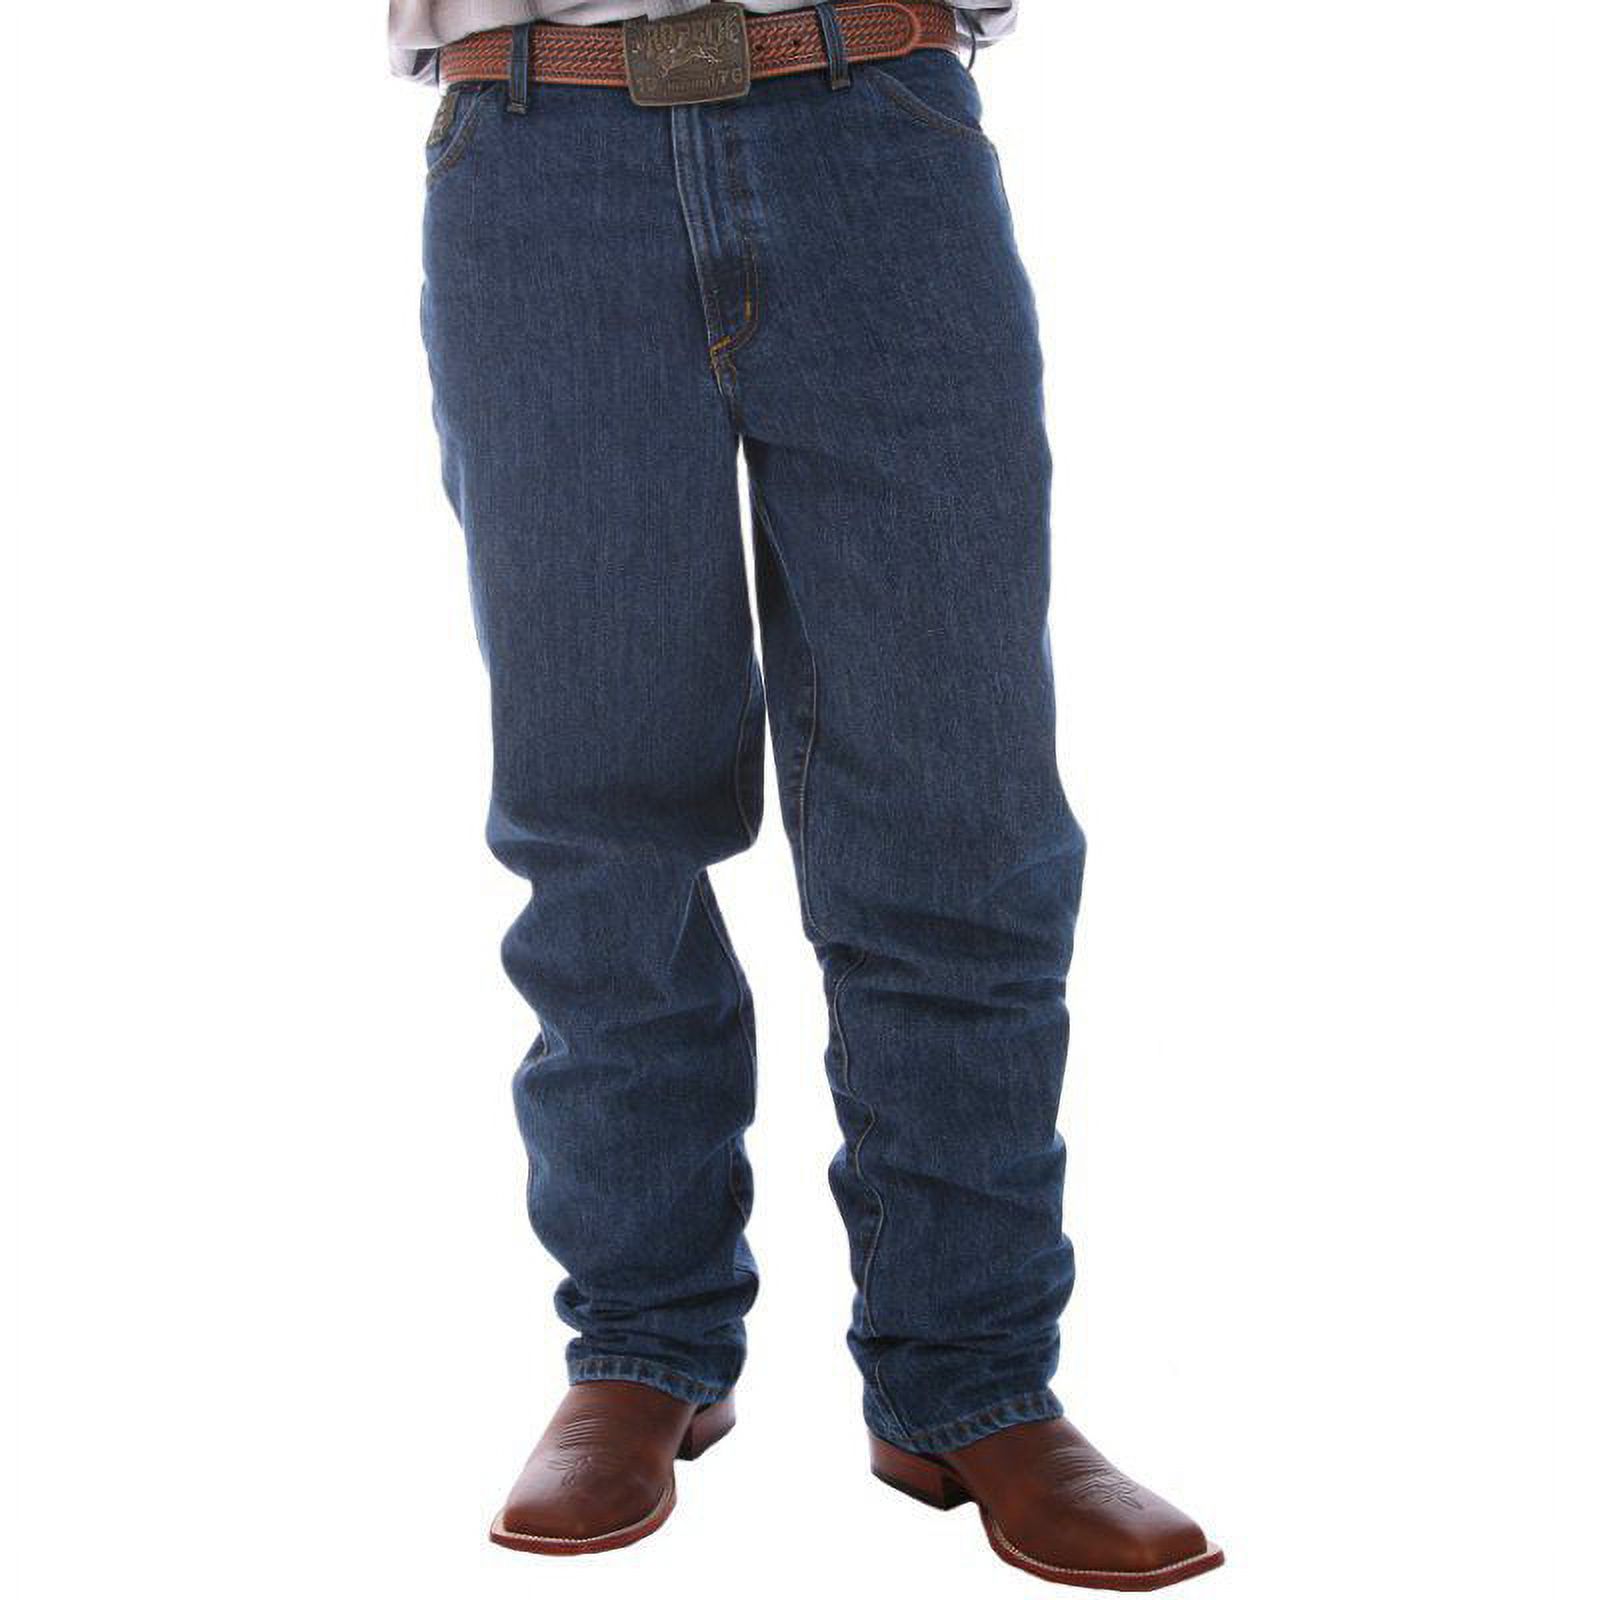 Cinch Apparel Mens Green Label Original Fit Jeans 44x36 Dark Stonewash - image 4 of 4